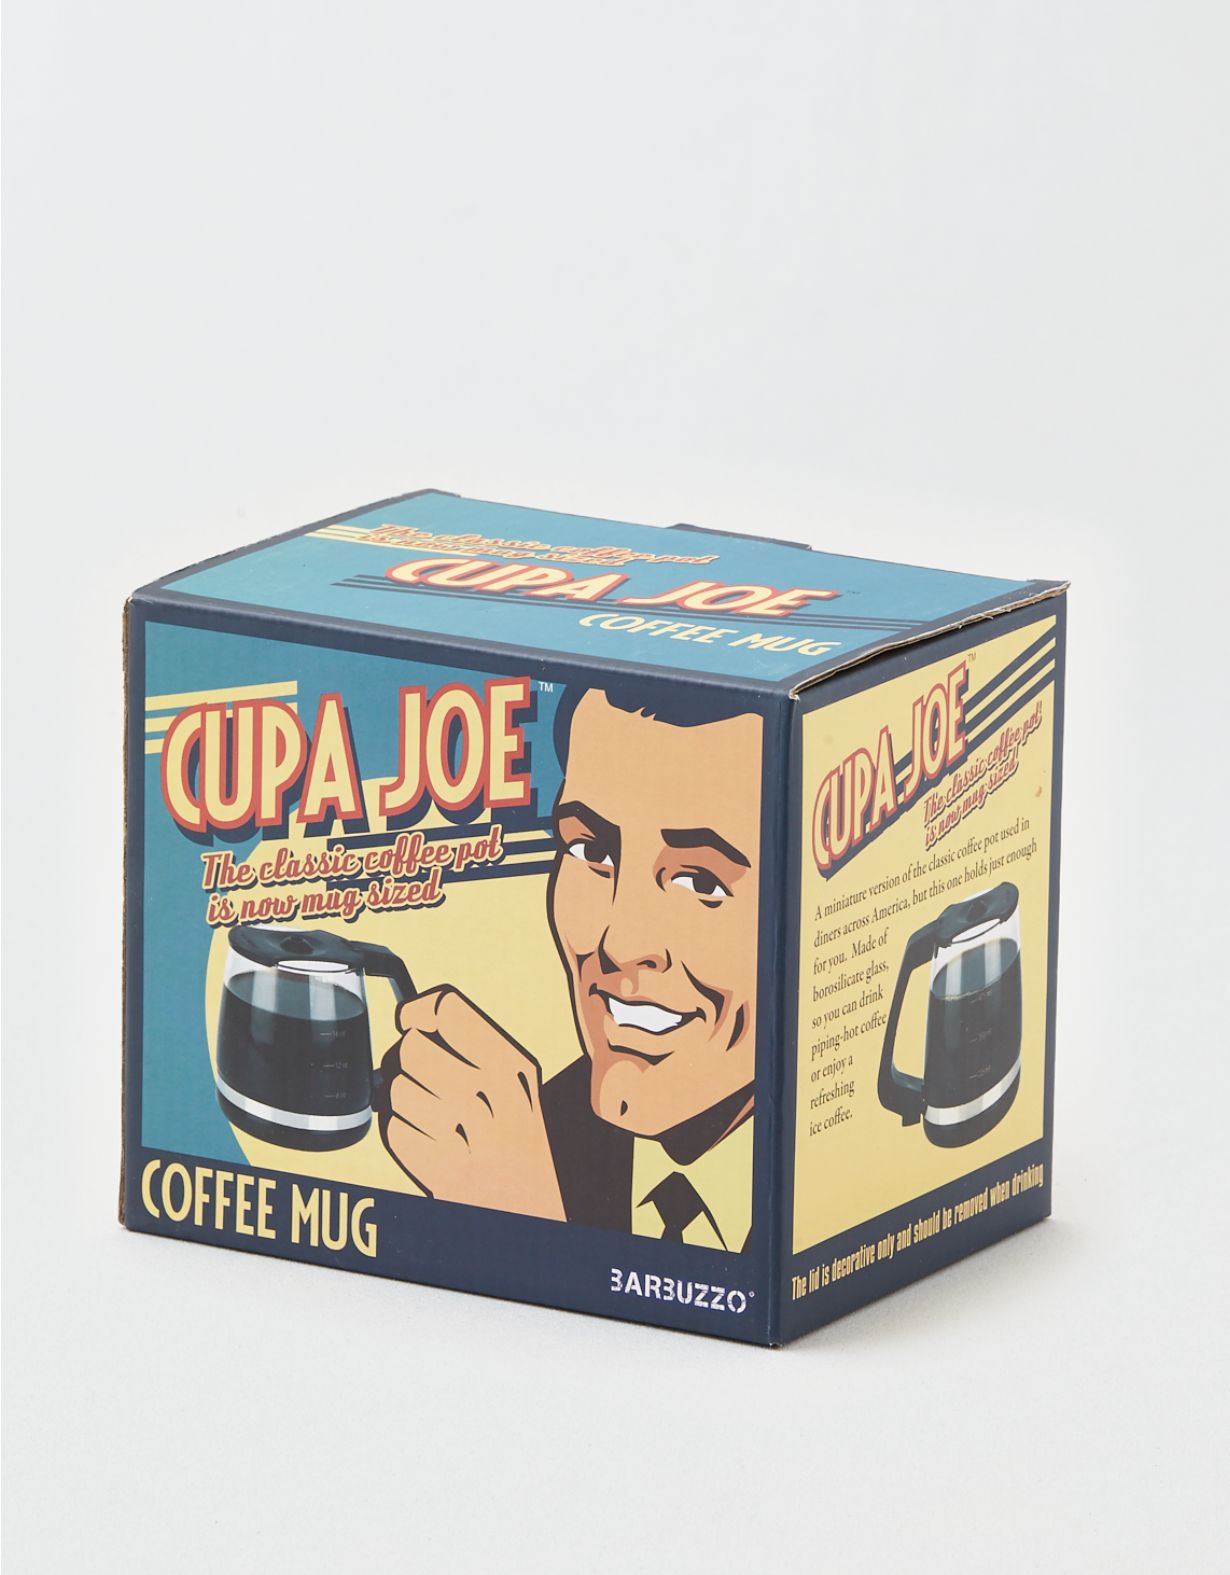 Barbuzzo Cupa Joe Coffee Mug